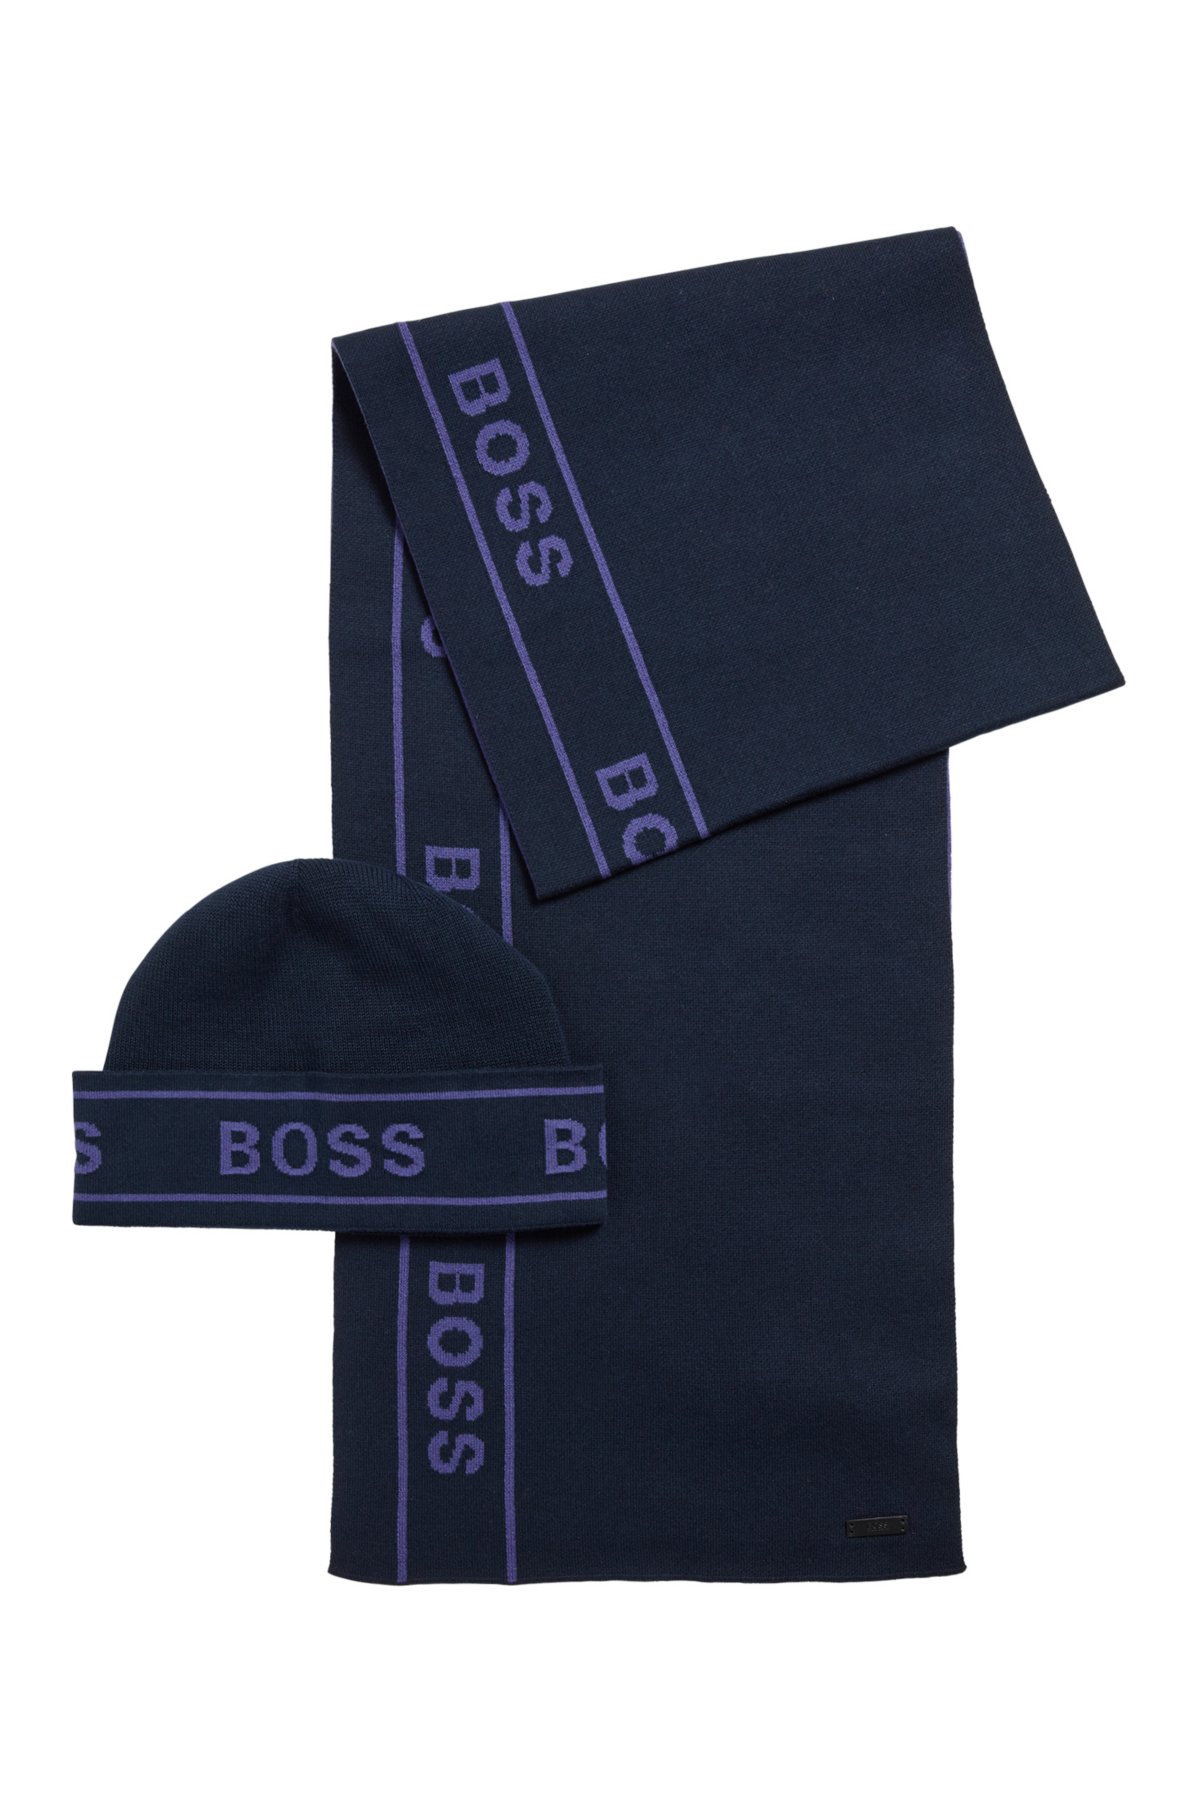 BOSS Logo Beanie and Scarf Set